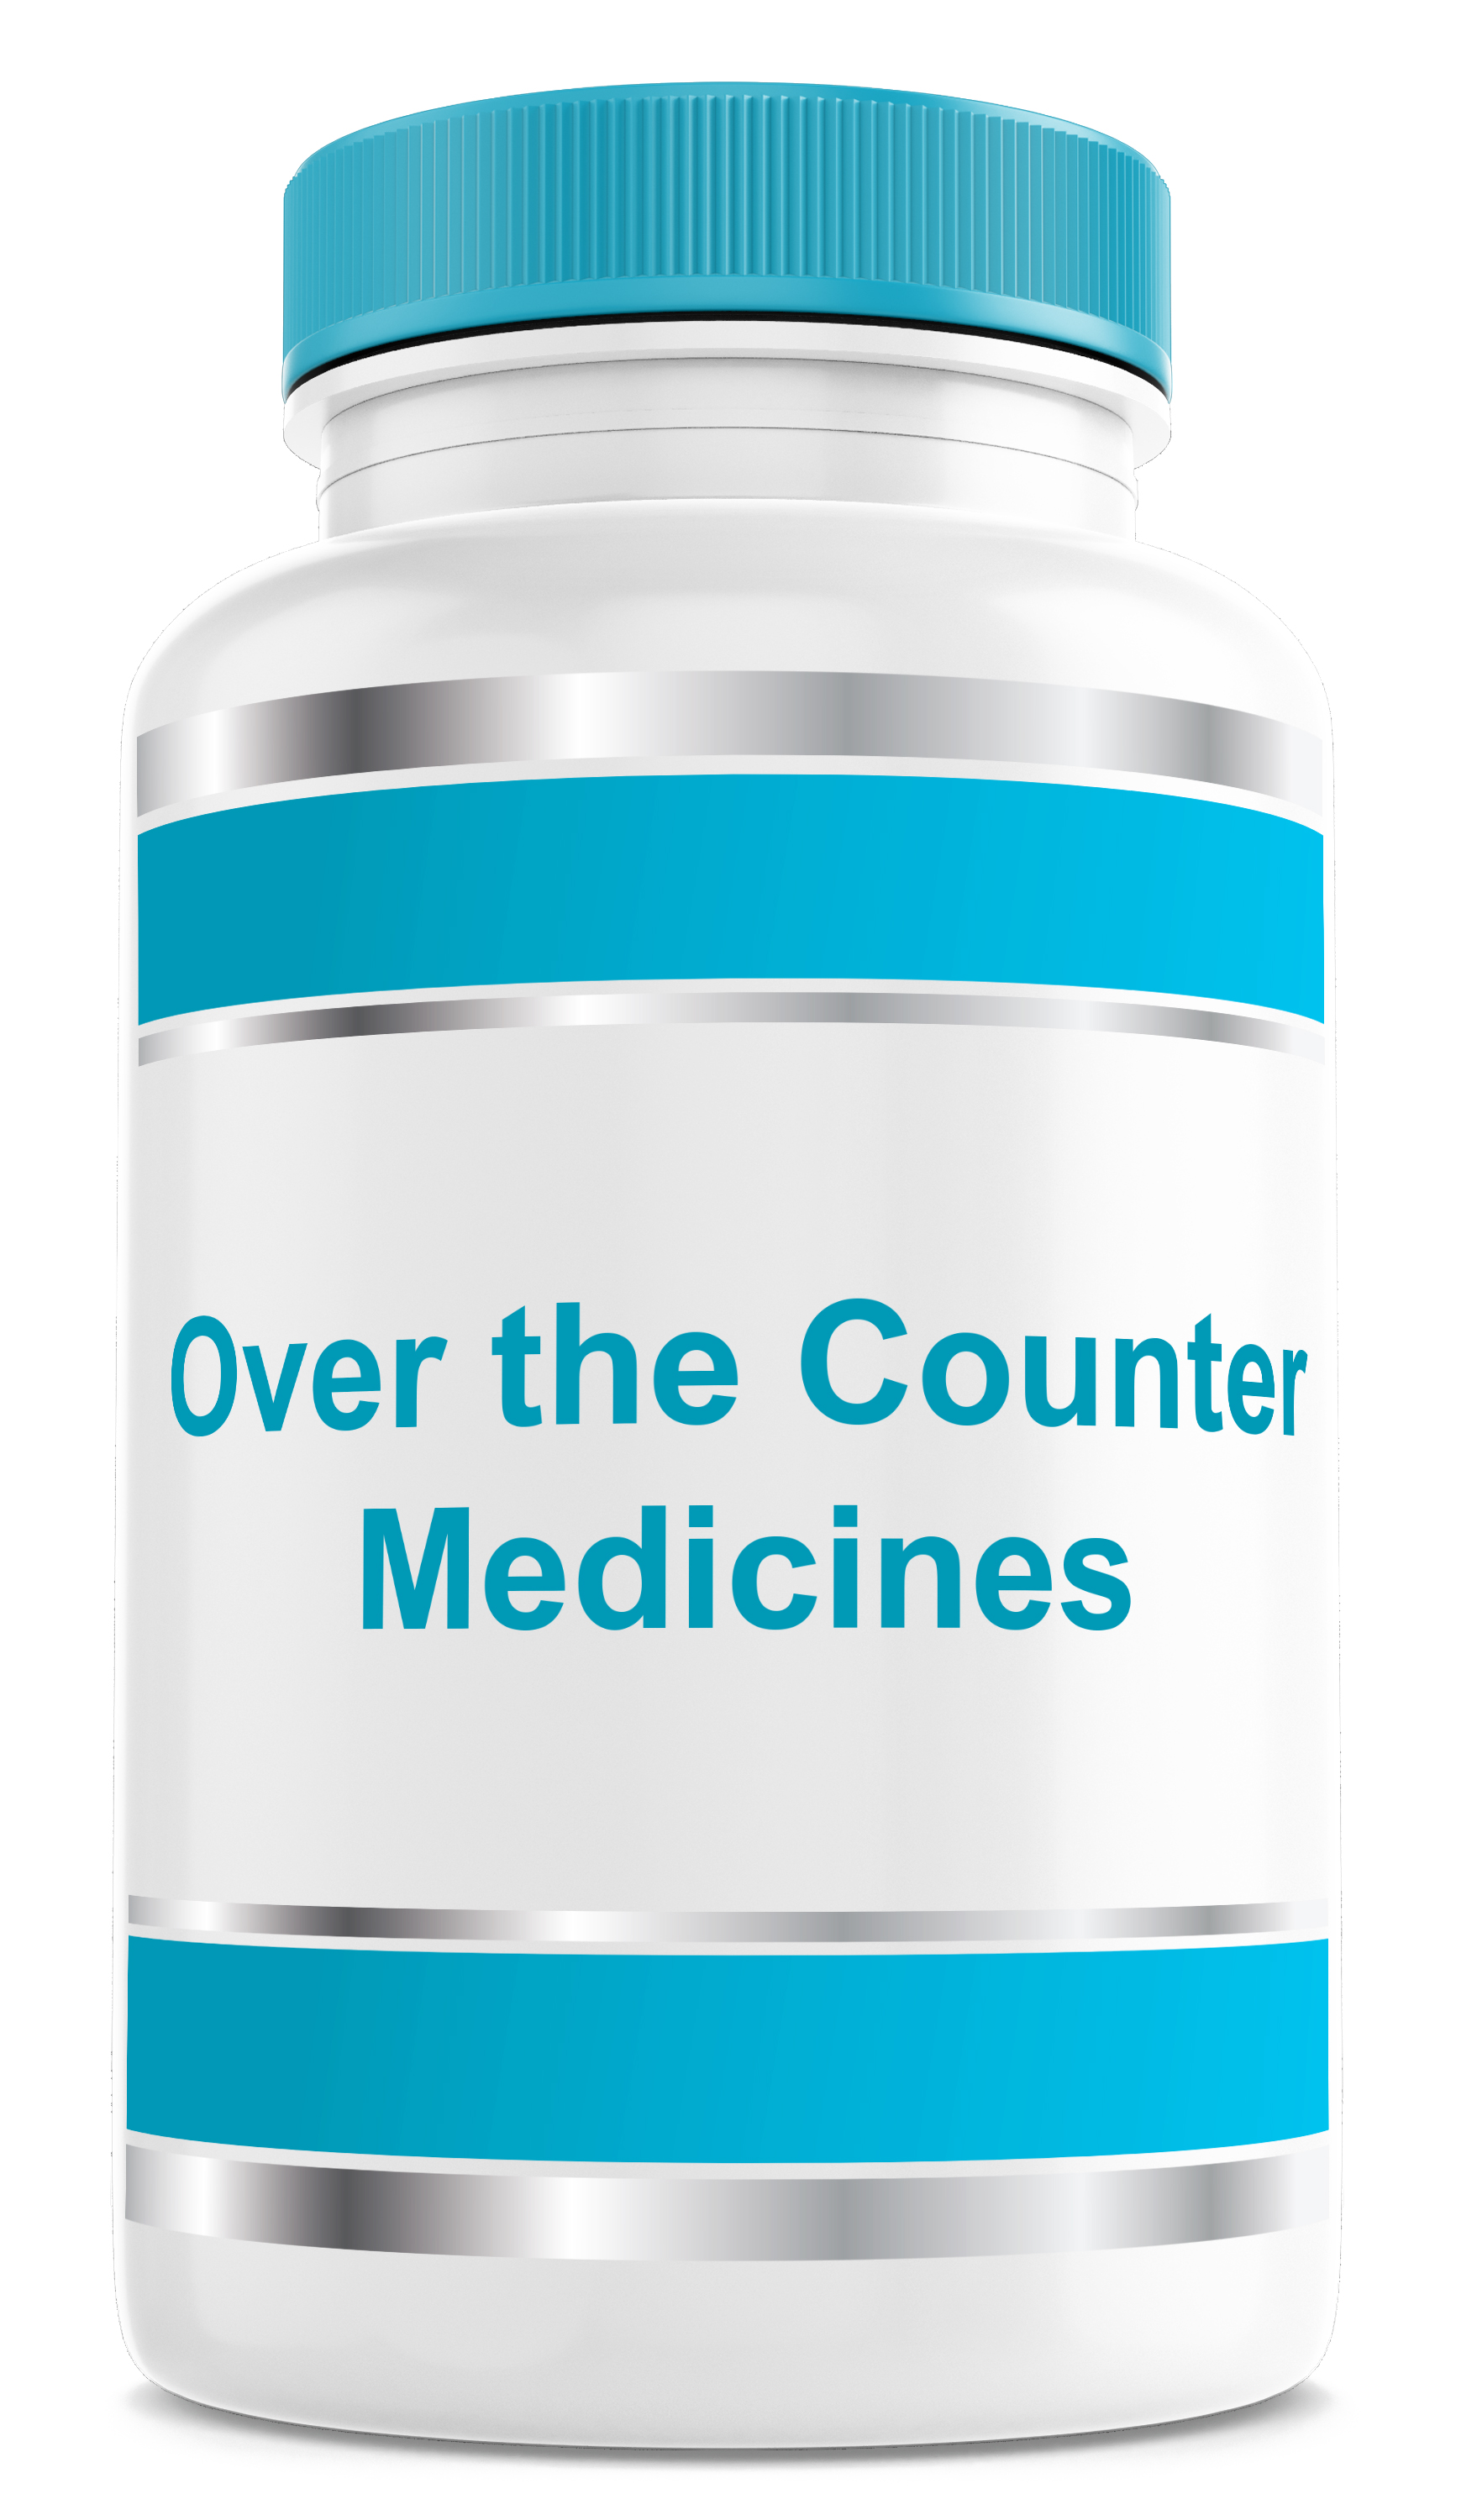 OTC Medicines